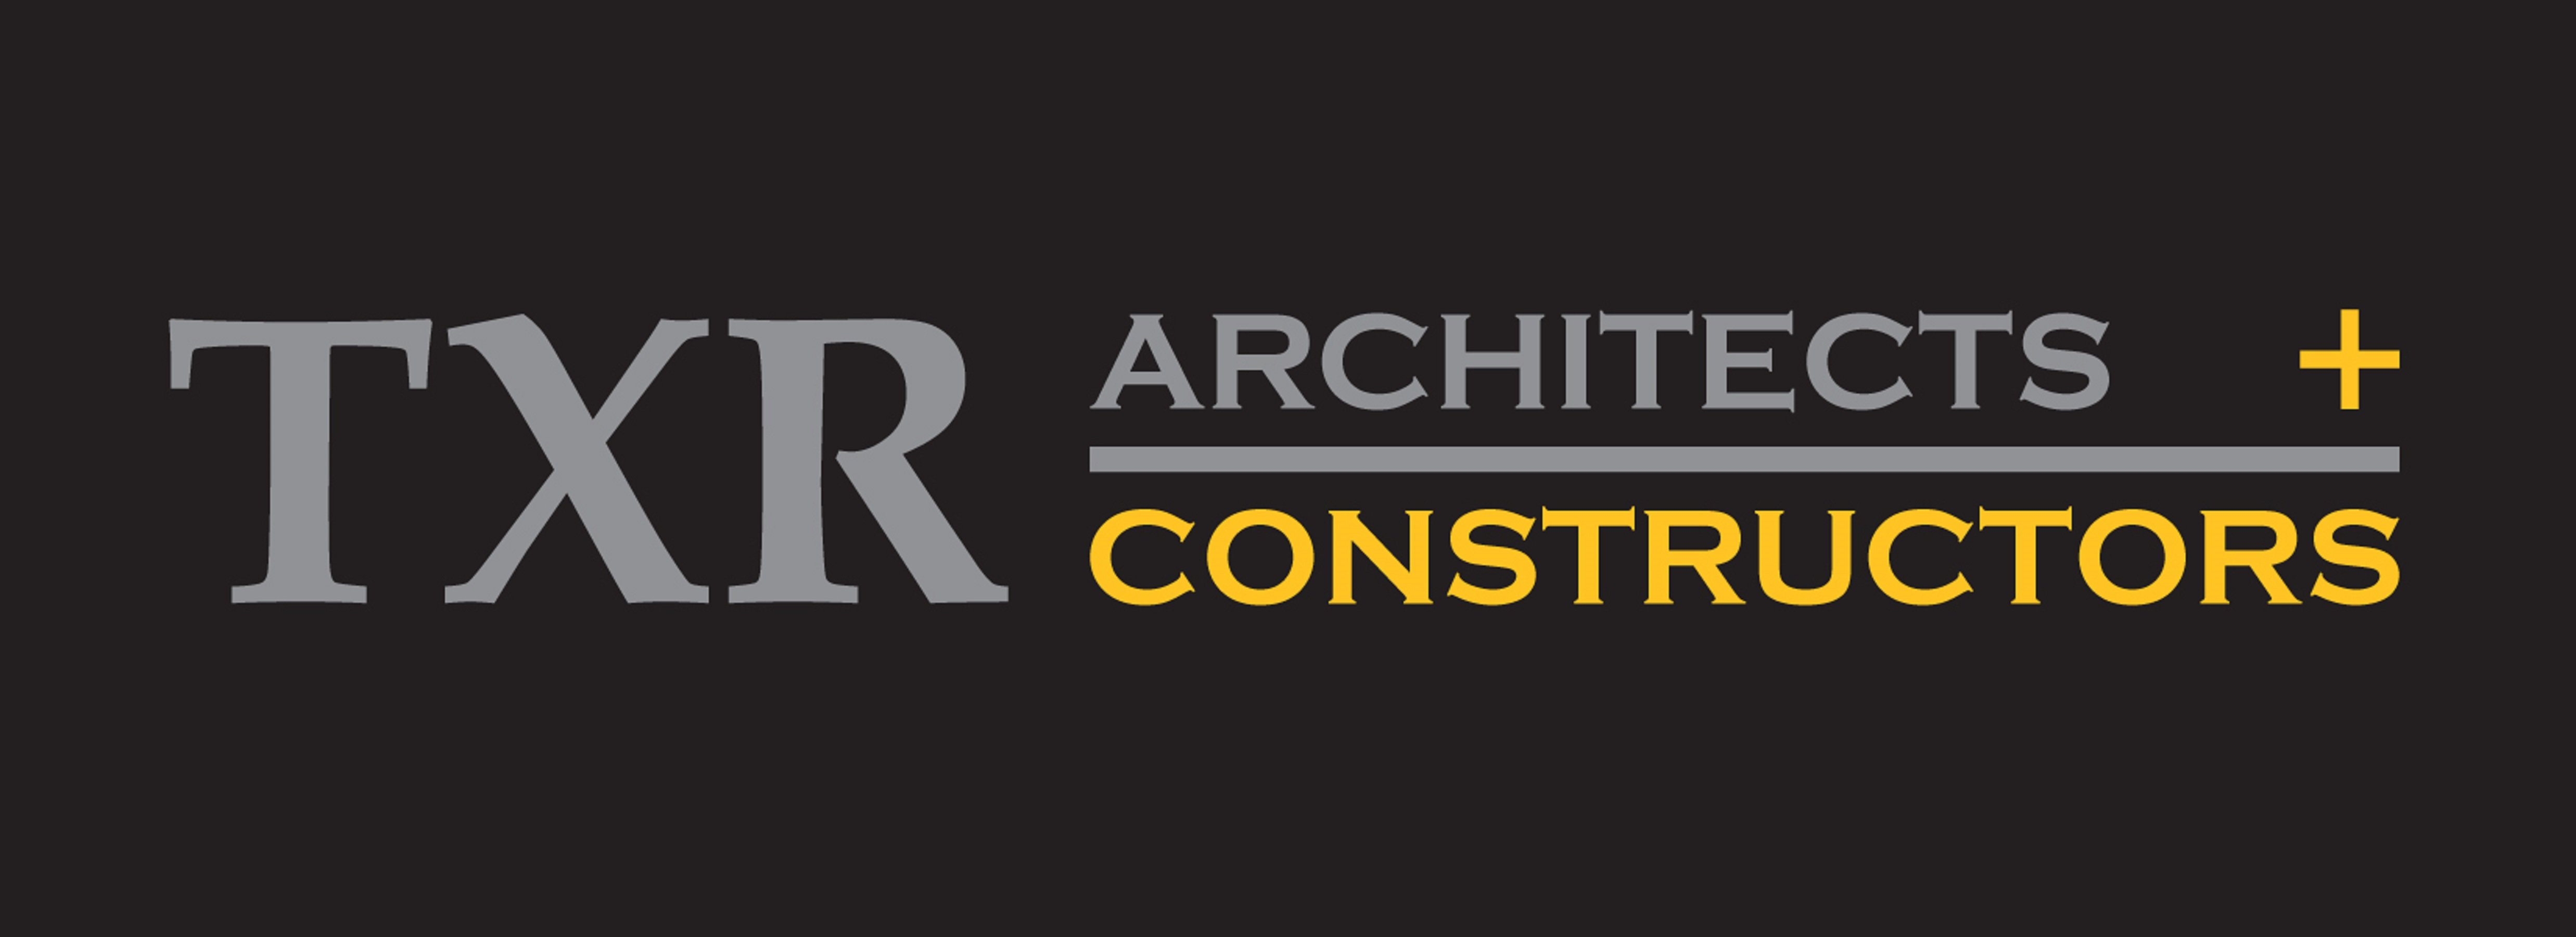 TXR Architects + Constructors Logo